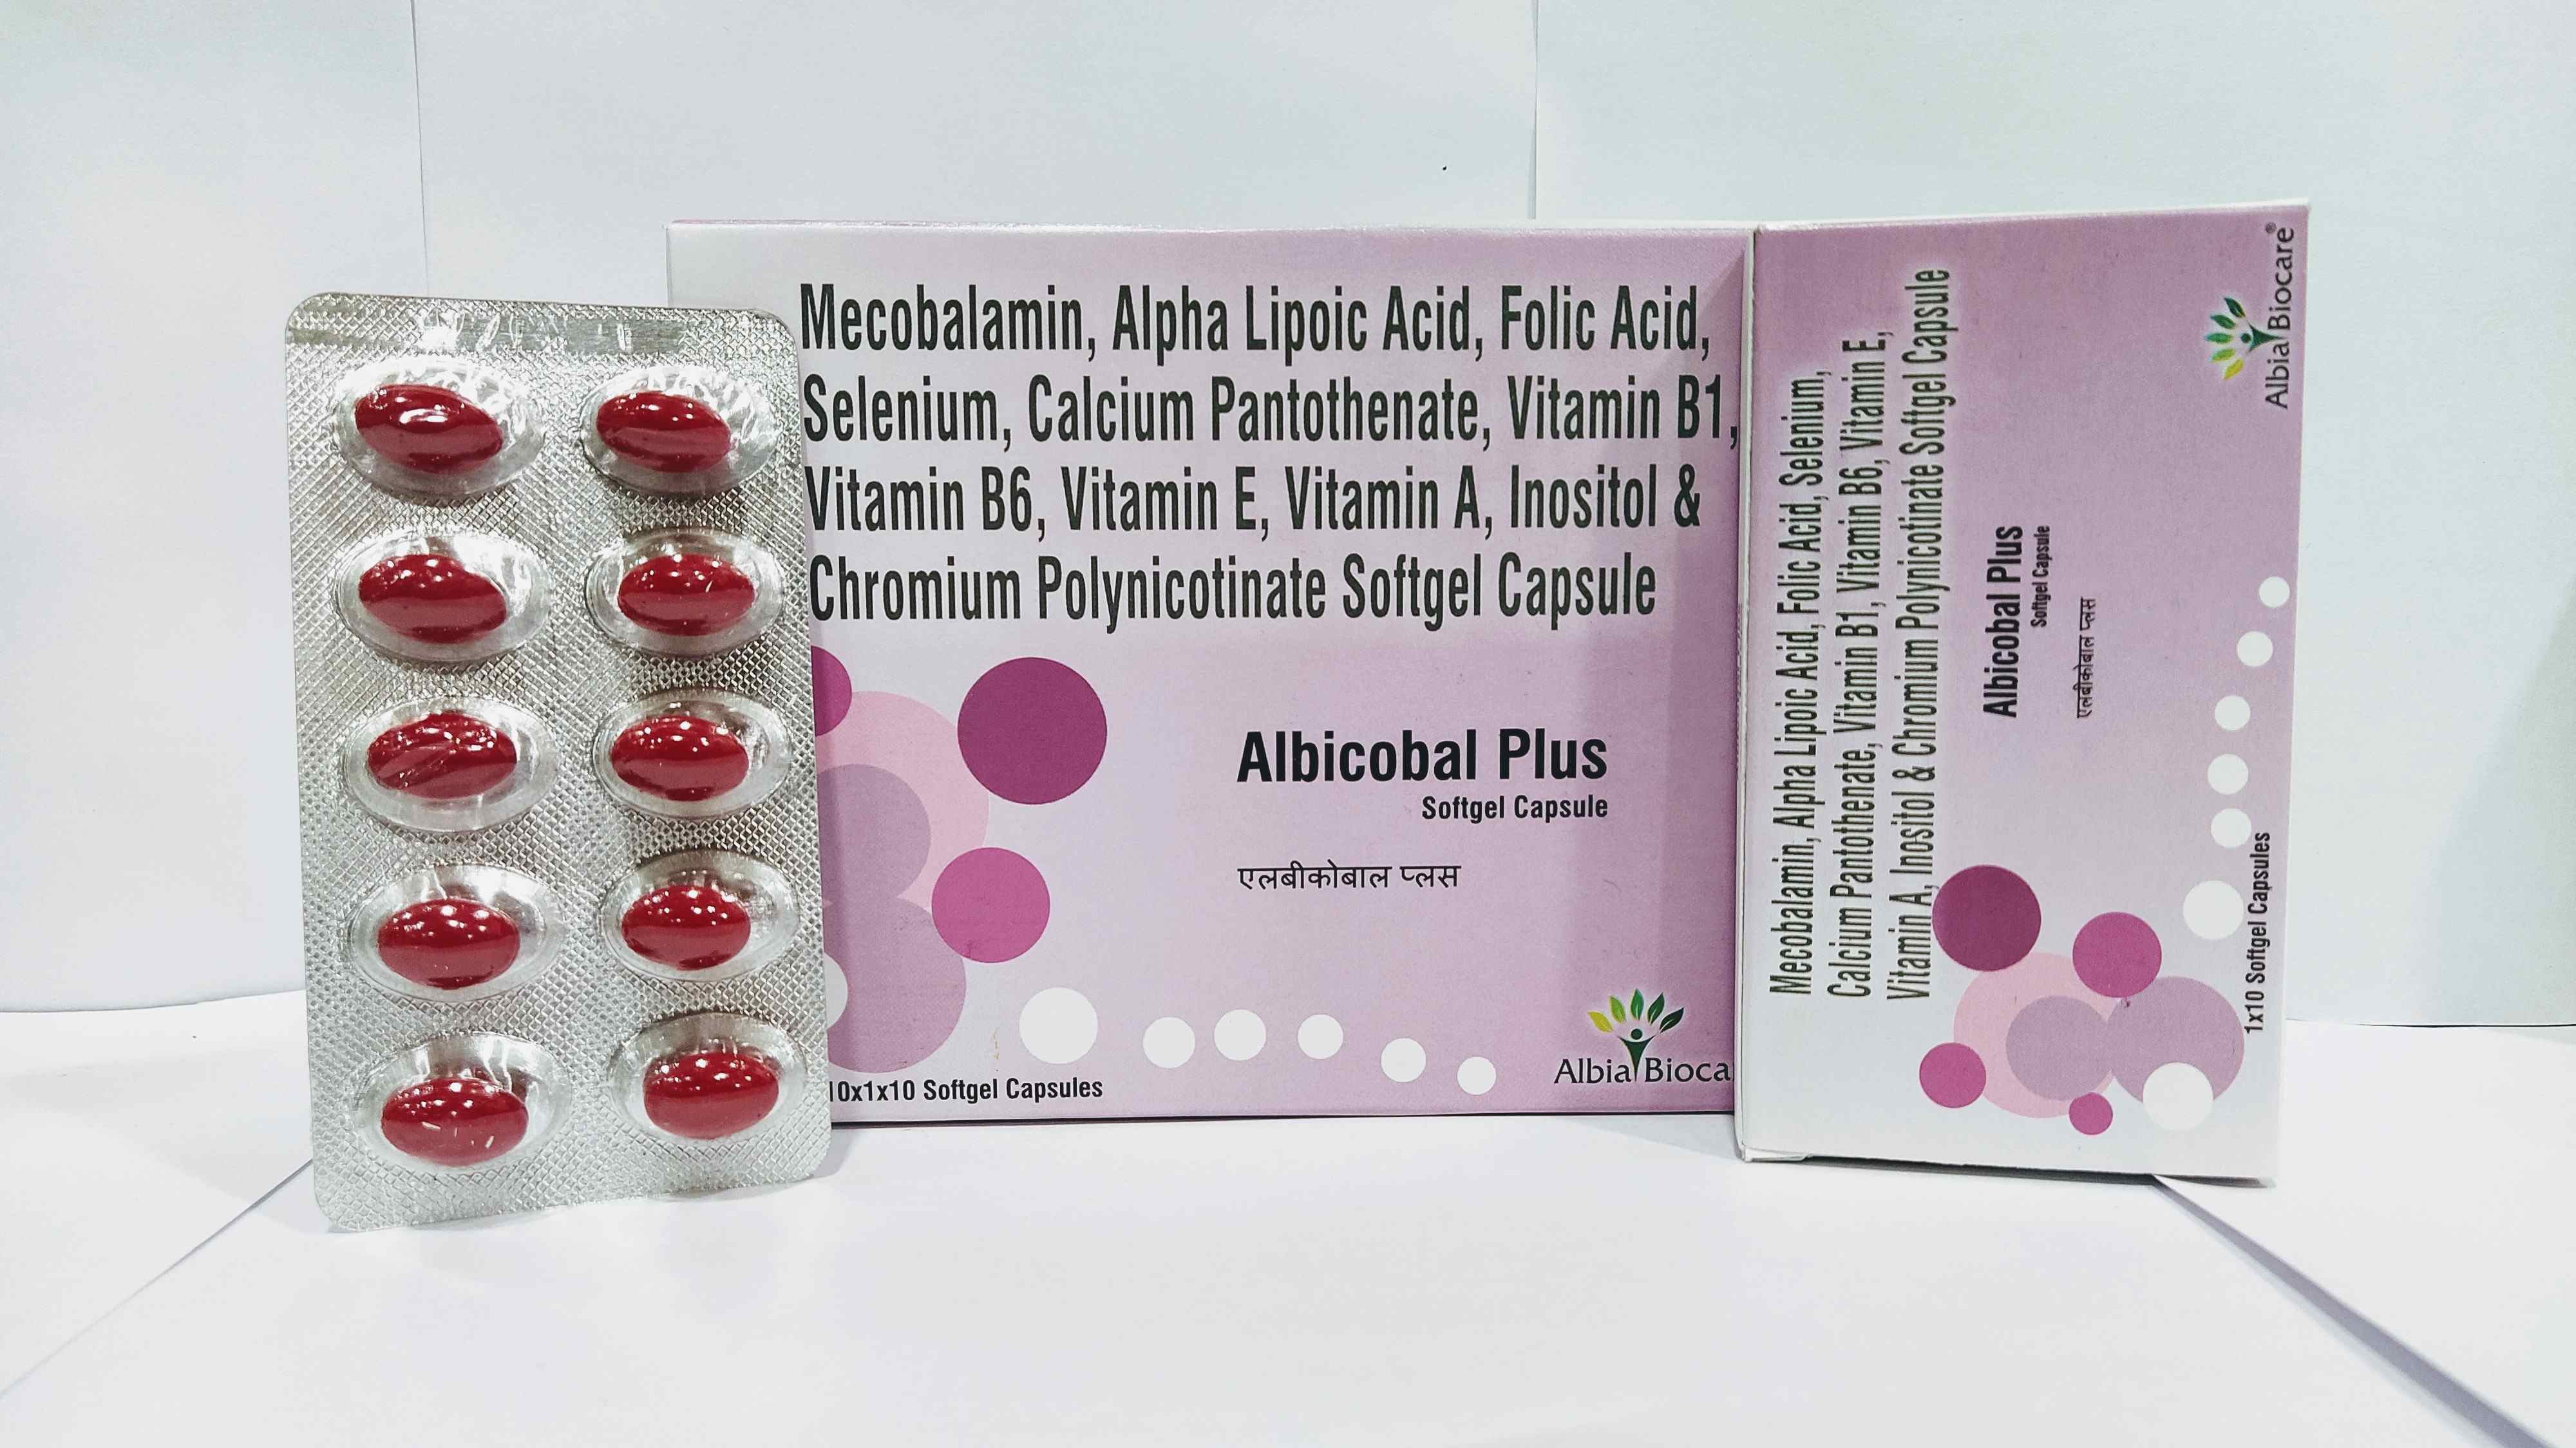 ALBICOBAL-PLUS Softgel | Mecobalamin 1500 mcg + Alpha Lipoic Acid 100 mg + Folic Acid 1.5 mg + Selenium Dioxide 163.6 mcg + Calcium Pantothenate 10 mg + Vitamin B1 10 mg + Vitamin B6 1.5 mg + Vitamin E 25 IU + Inositol 100 mg + Chromium Polynicotinate  200 mcg  + Vitamin A 5000 IU